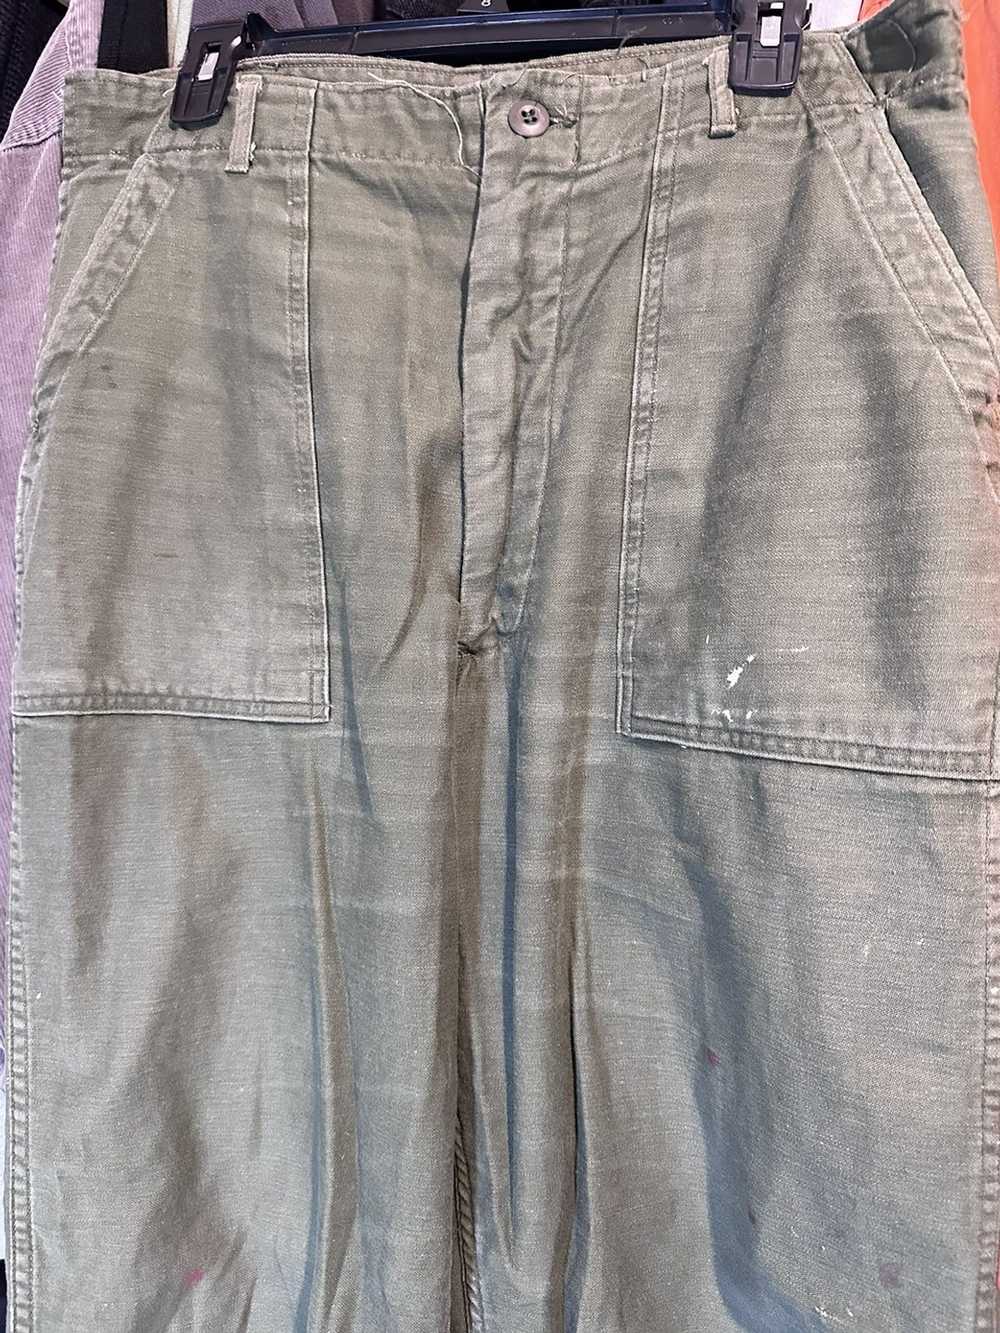 Military × Vintage Vintage military trouser pants - image 3